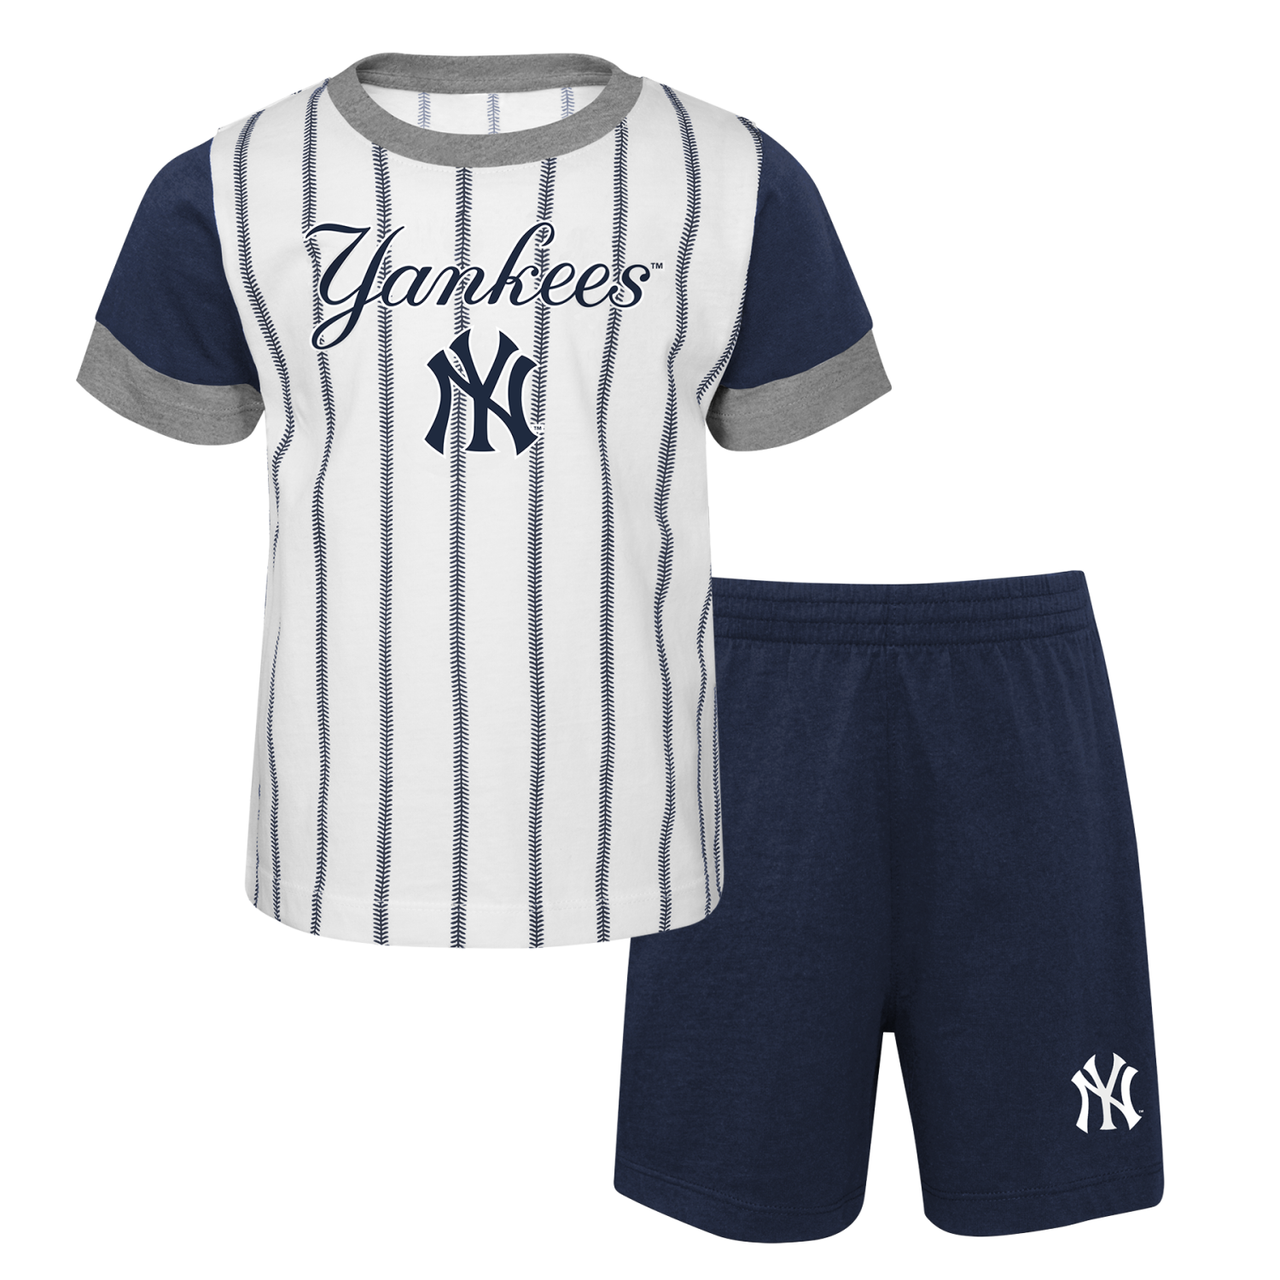 Yankees t shirt 4T - munimoro.gob.pe